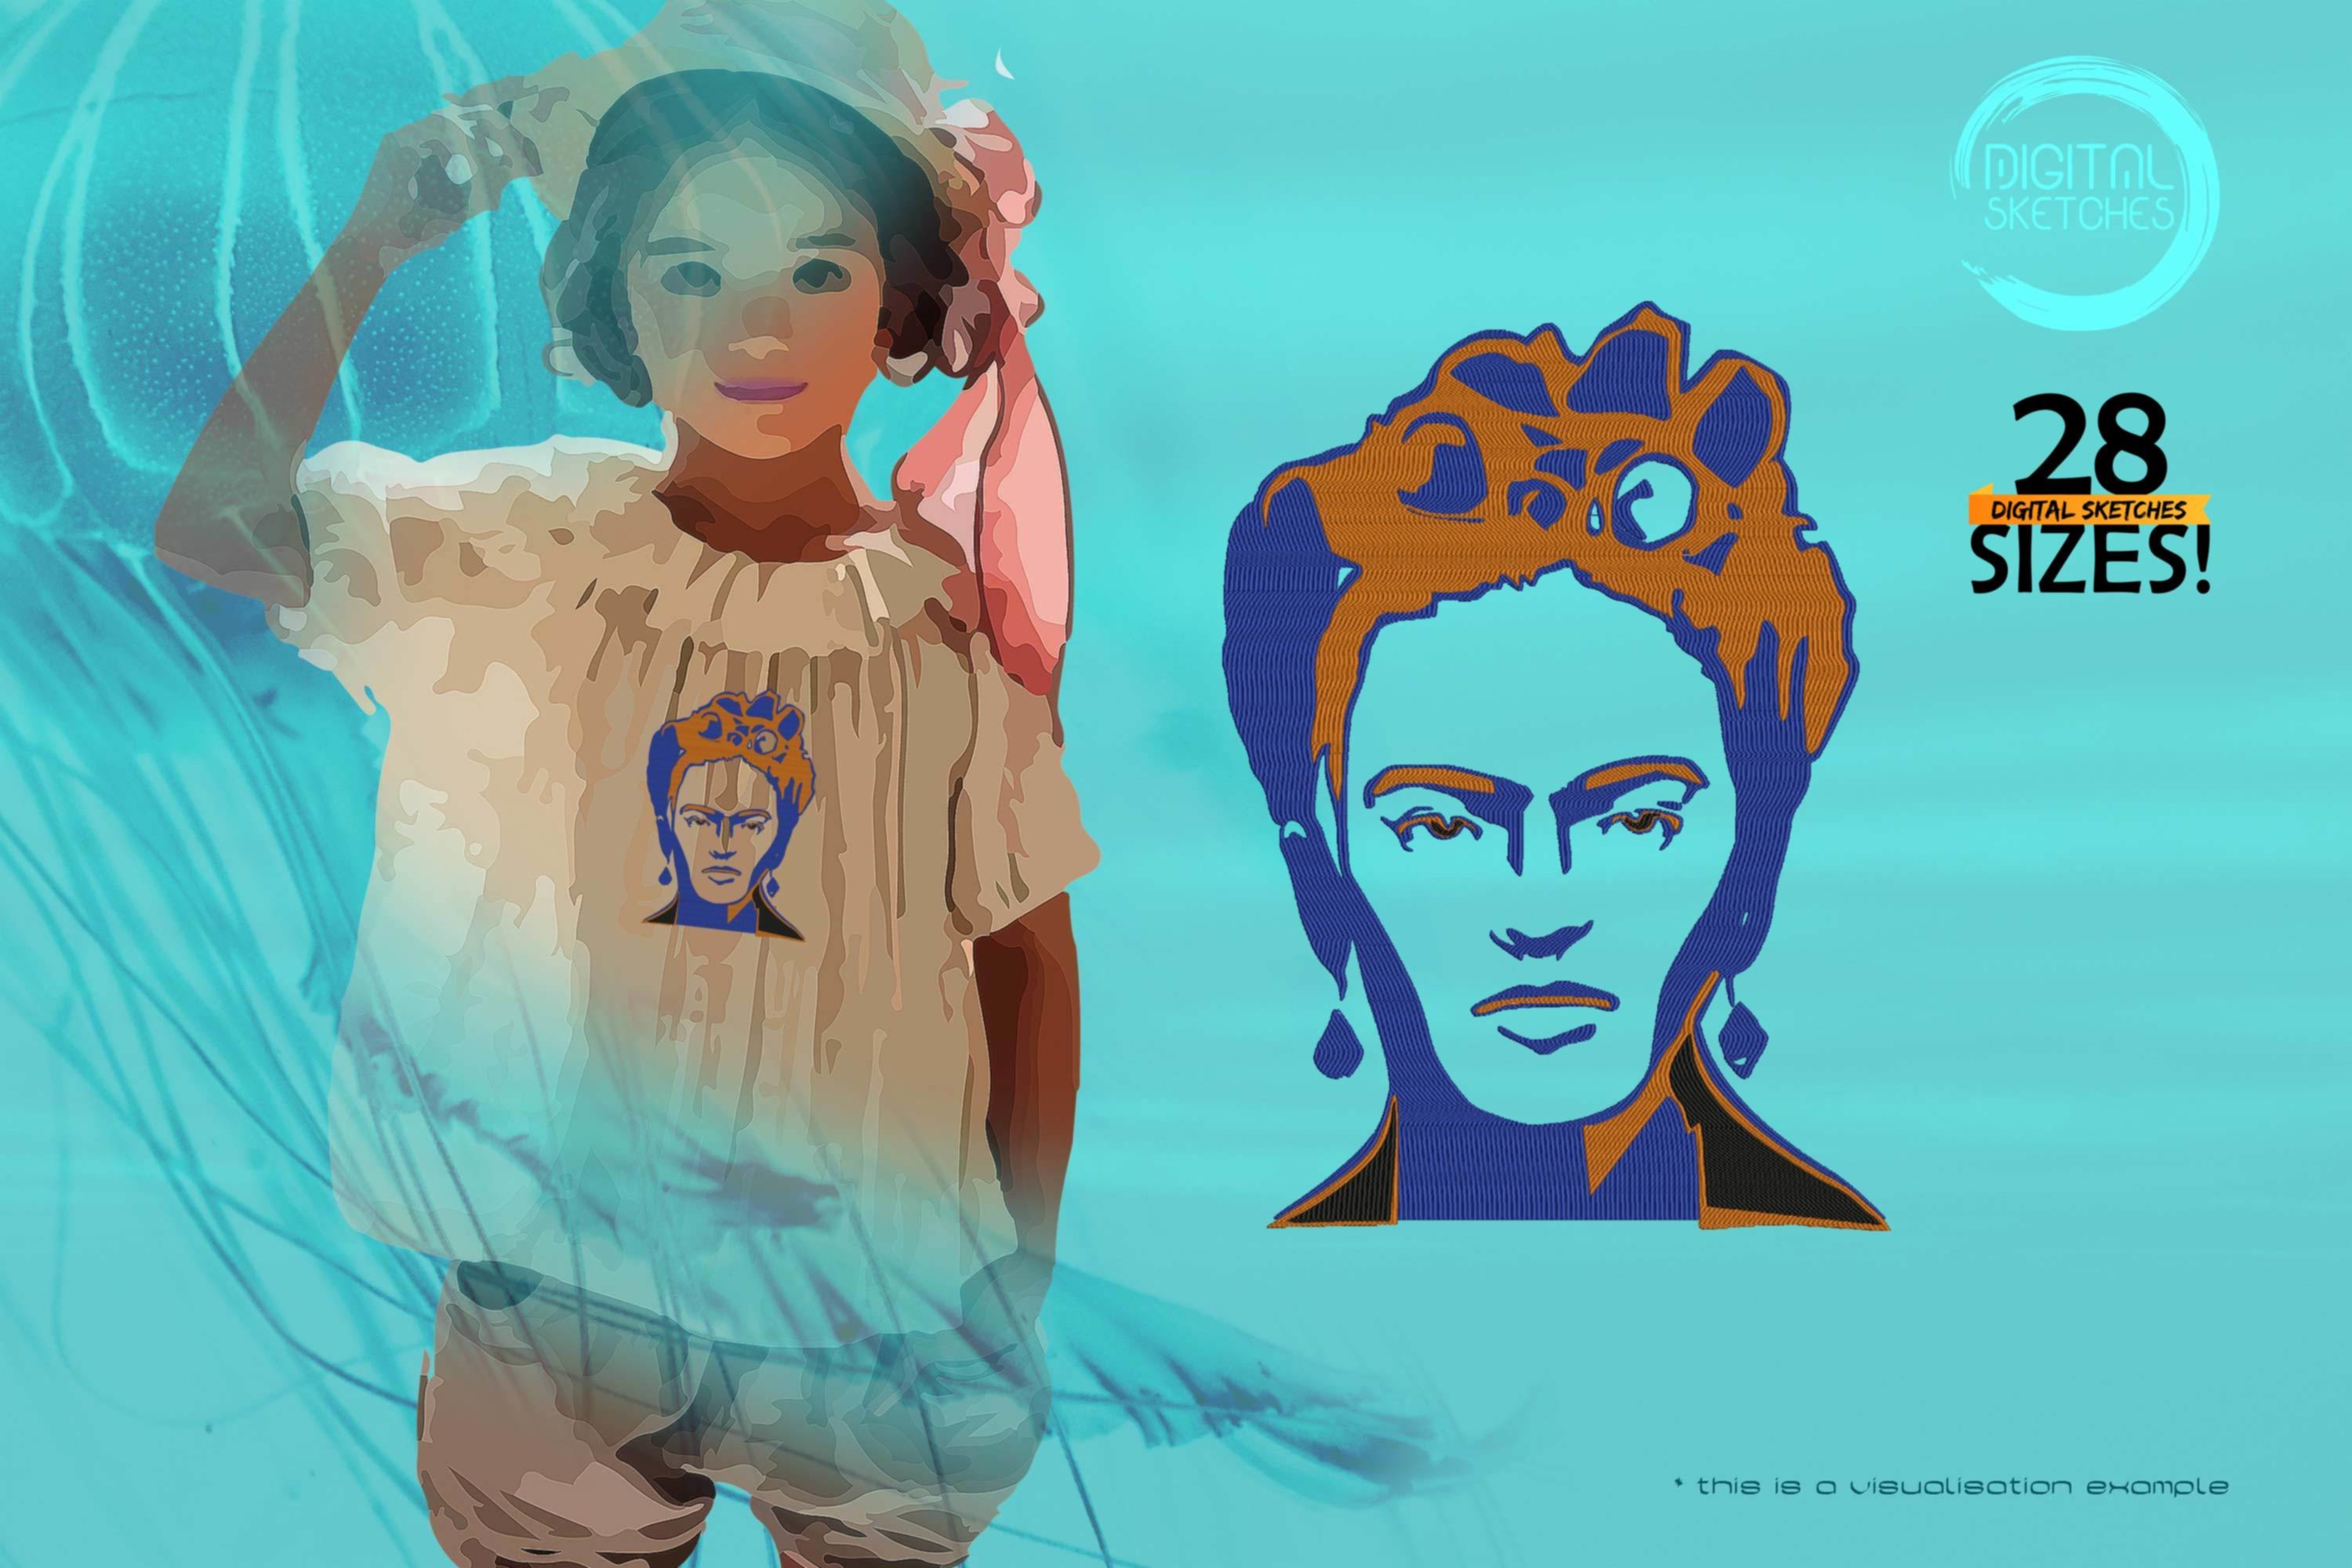 Tribute To Artist Magdalena Carmen Frieda Kahlo Y Calderon aka Frida Kahlo (Frontal View)